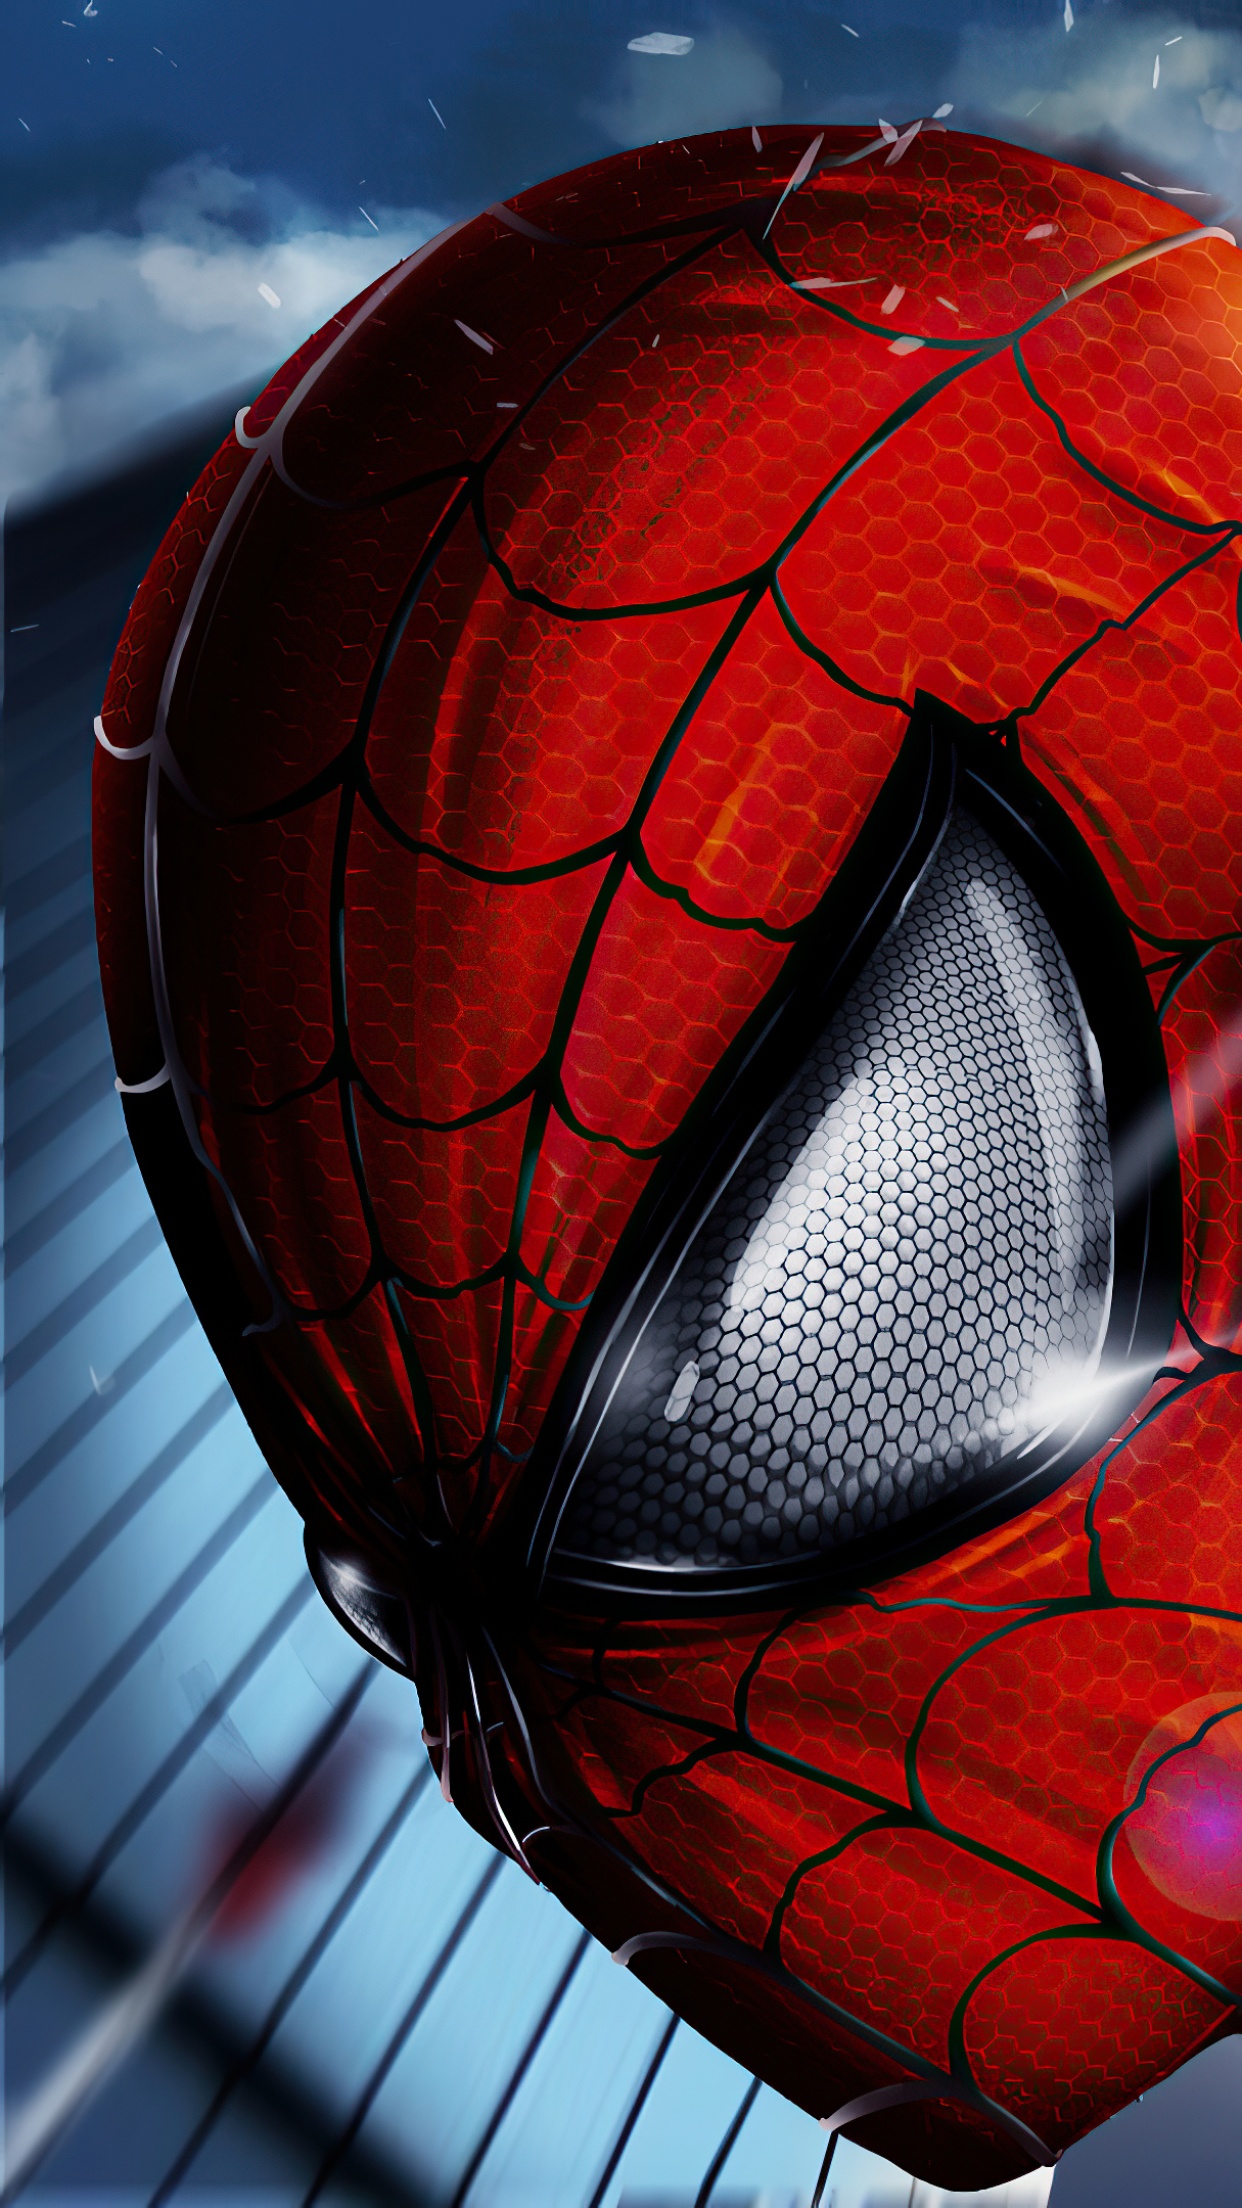 Spider-Man 4K Wallpaper, Marvel Superheroes, Graphics C   GI